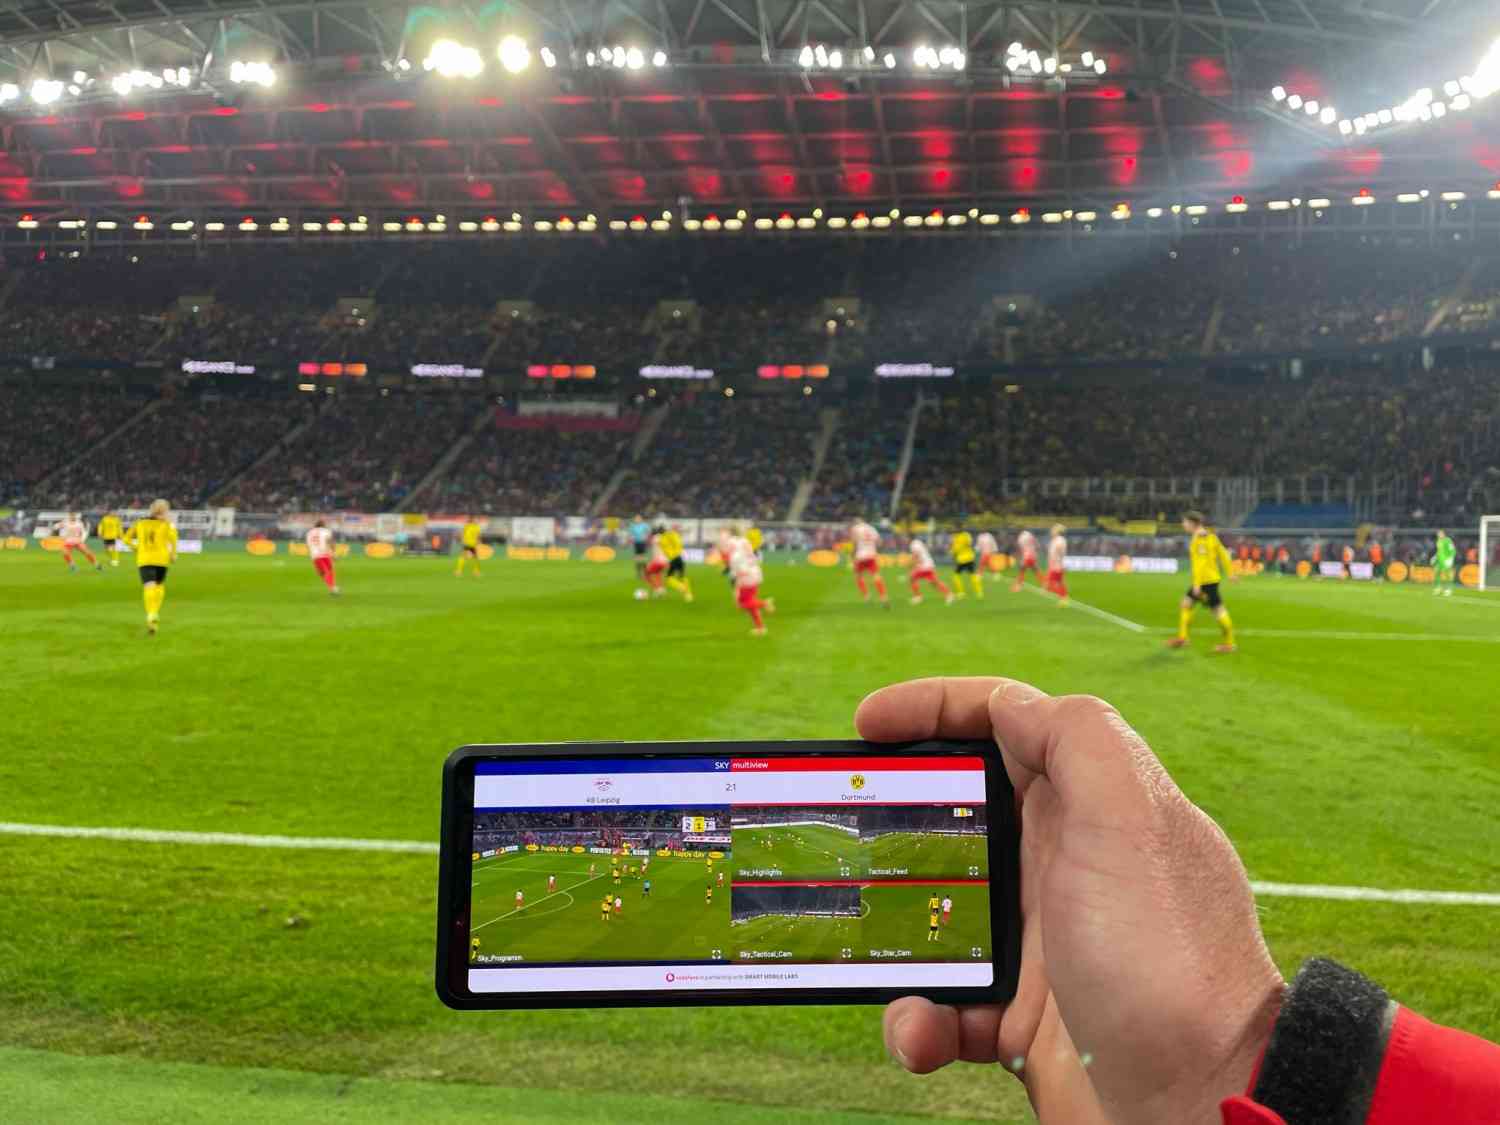 mobile Devices Sky testet neue „Sky 5G Multiview App“: Live-Features auf dem Smartphone im Stadion - News, Bild 1